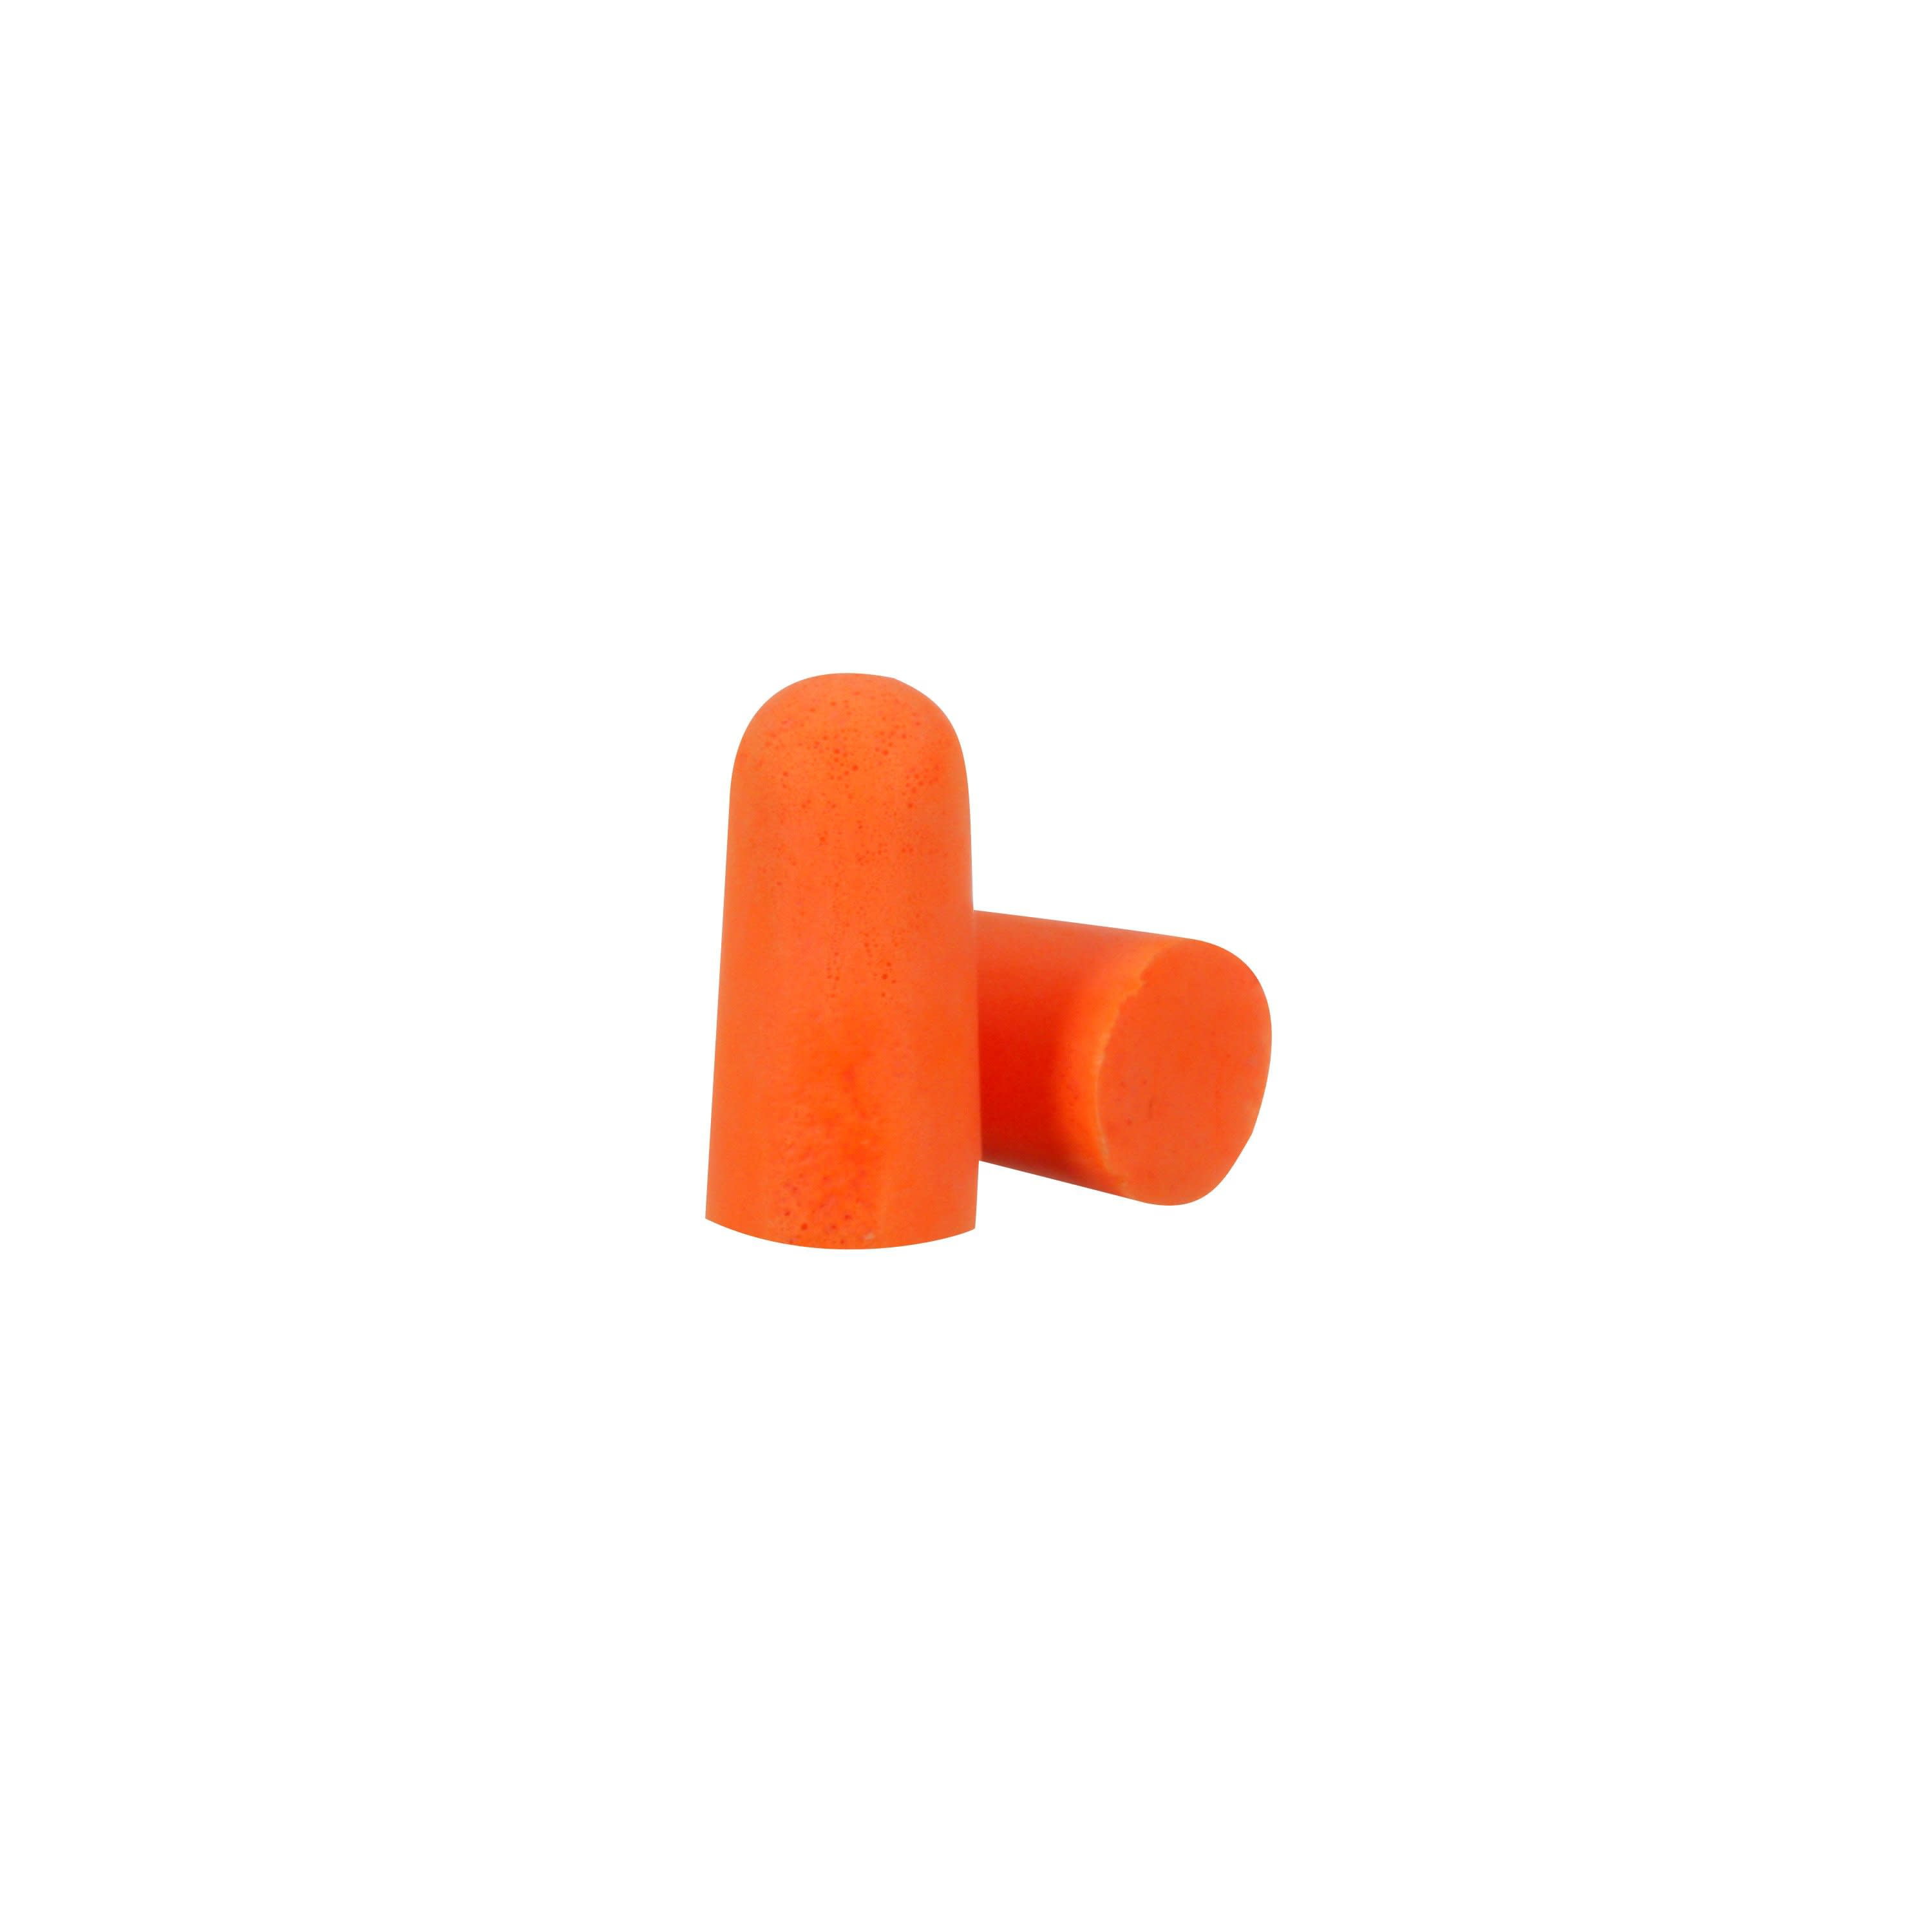 Cwc Orange Polyurethane Corded Foam Ear Plugs - 8 Pack - 510869